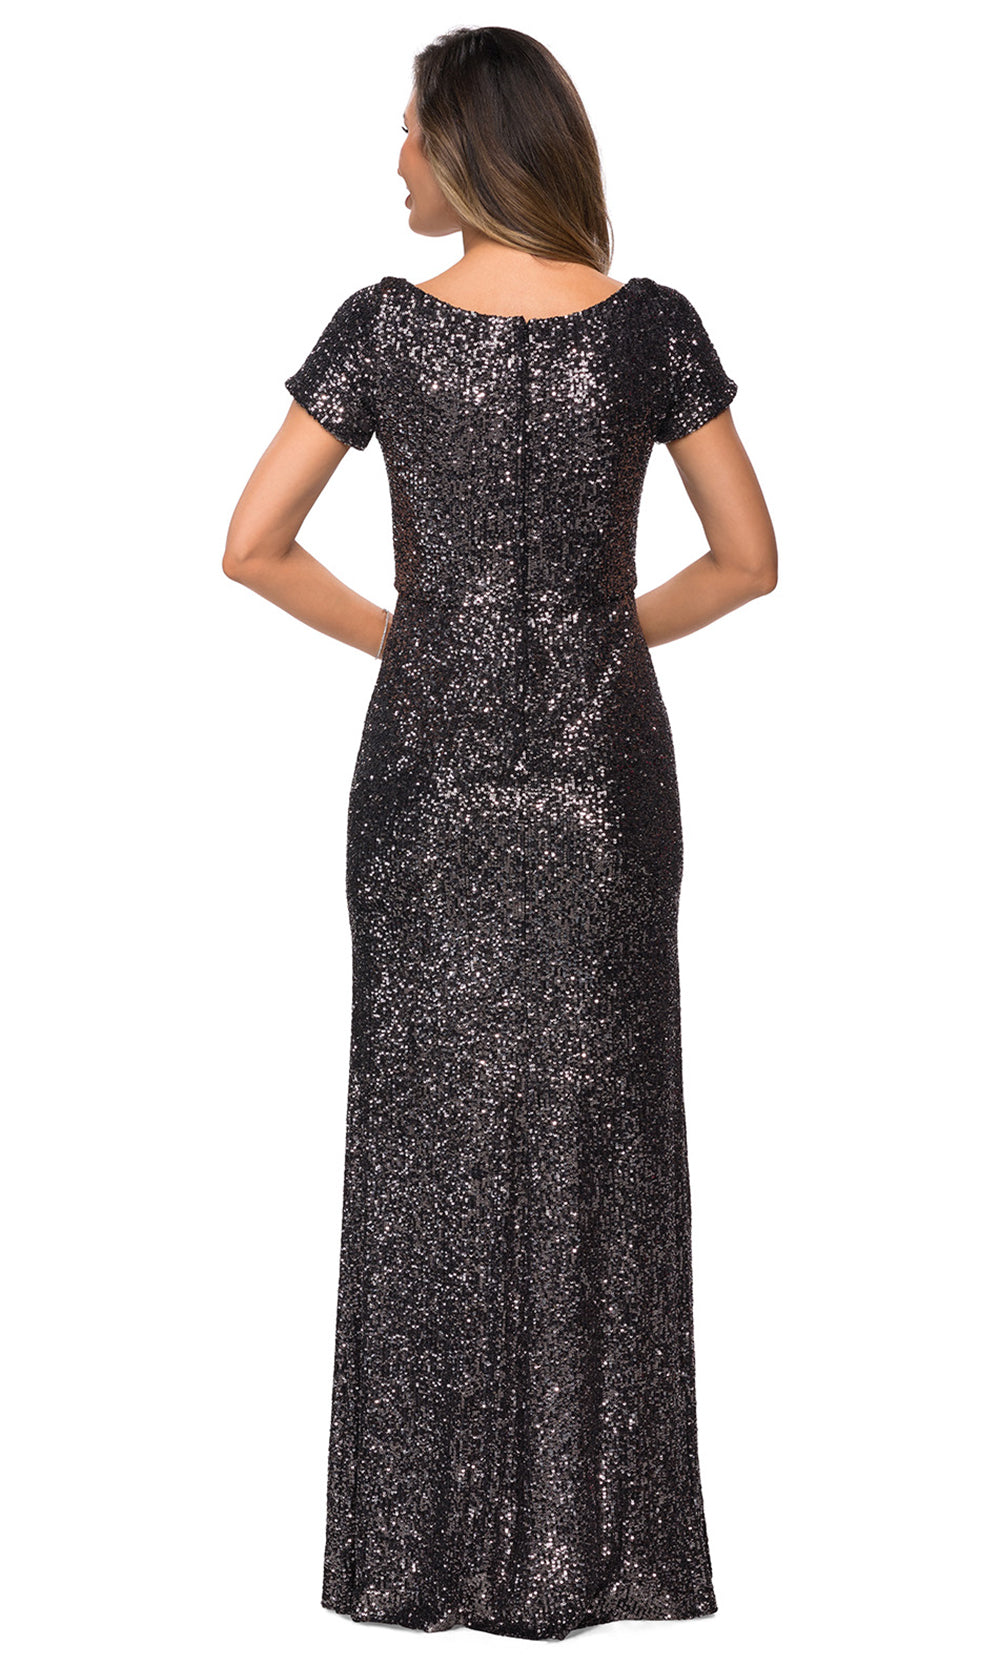 La Femme - 27916 Scoop Neck Full Sequin Sheath Gown In Black